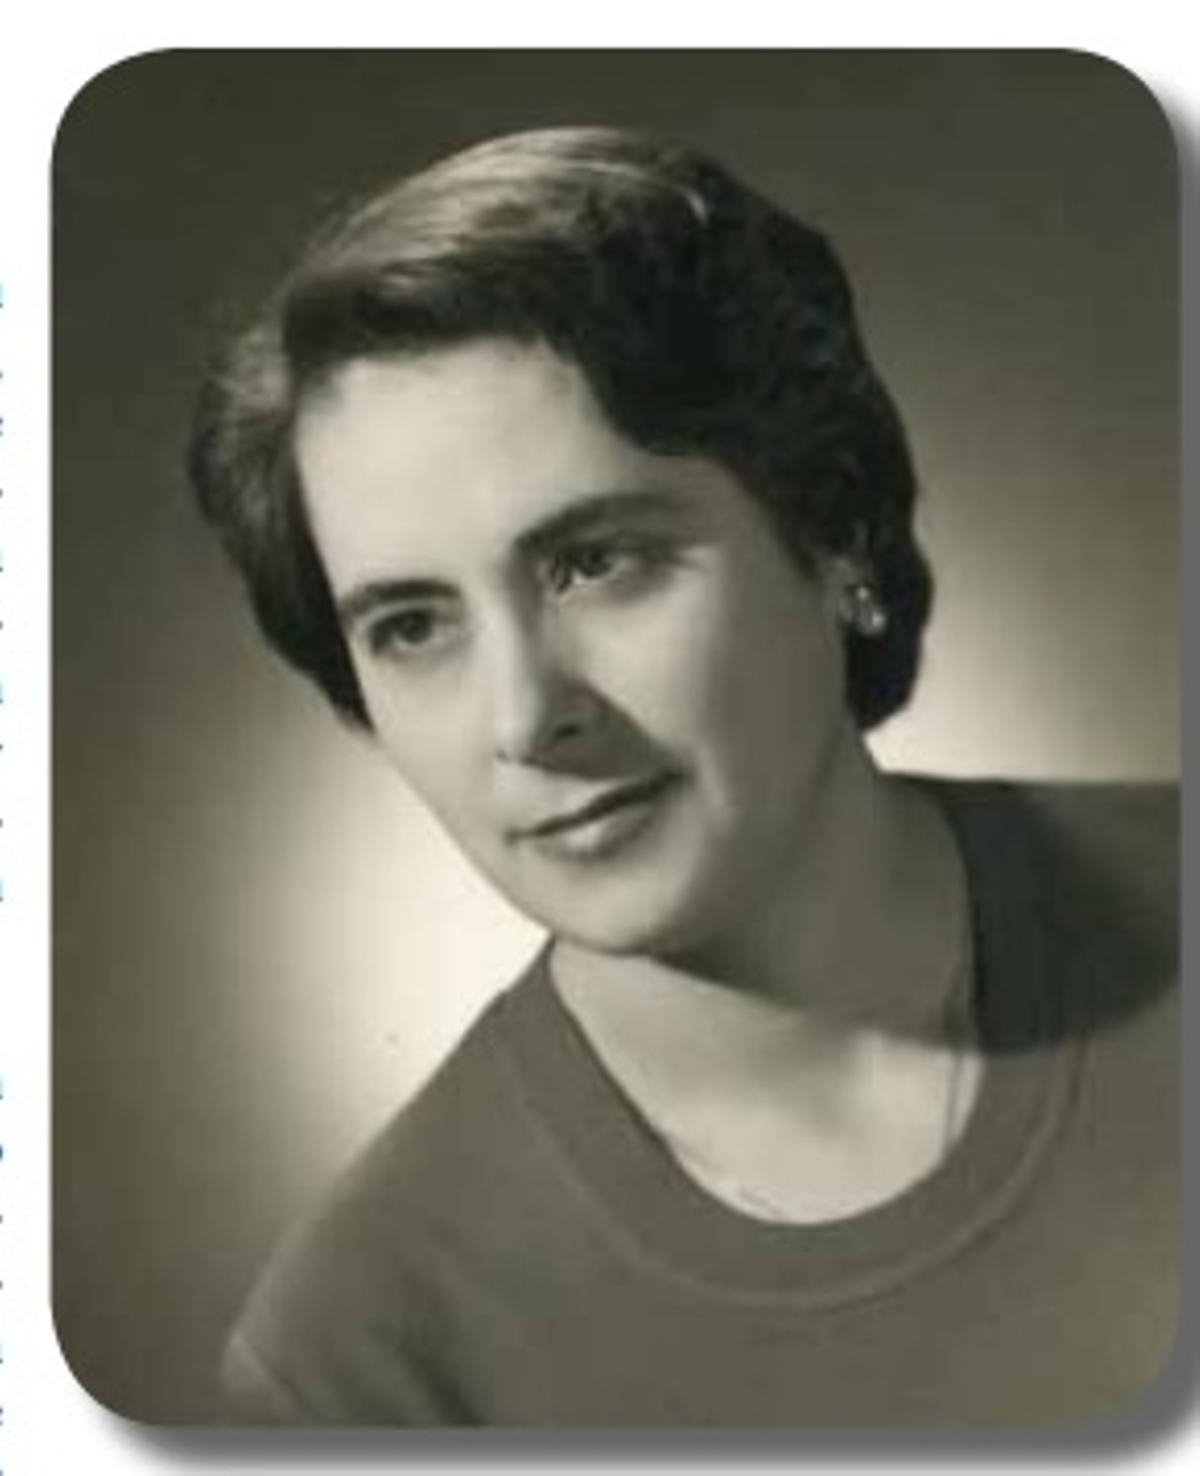 La médica cordobesa Antonia Nevado Vargas, nacida en 1920.